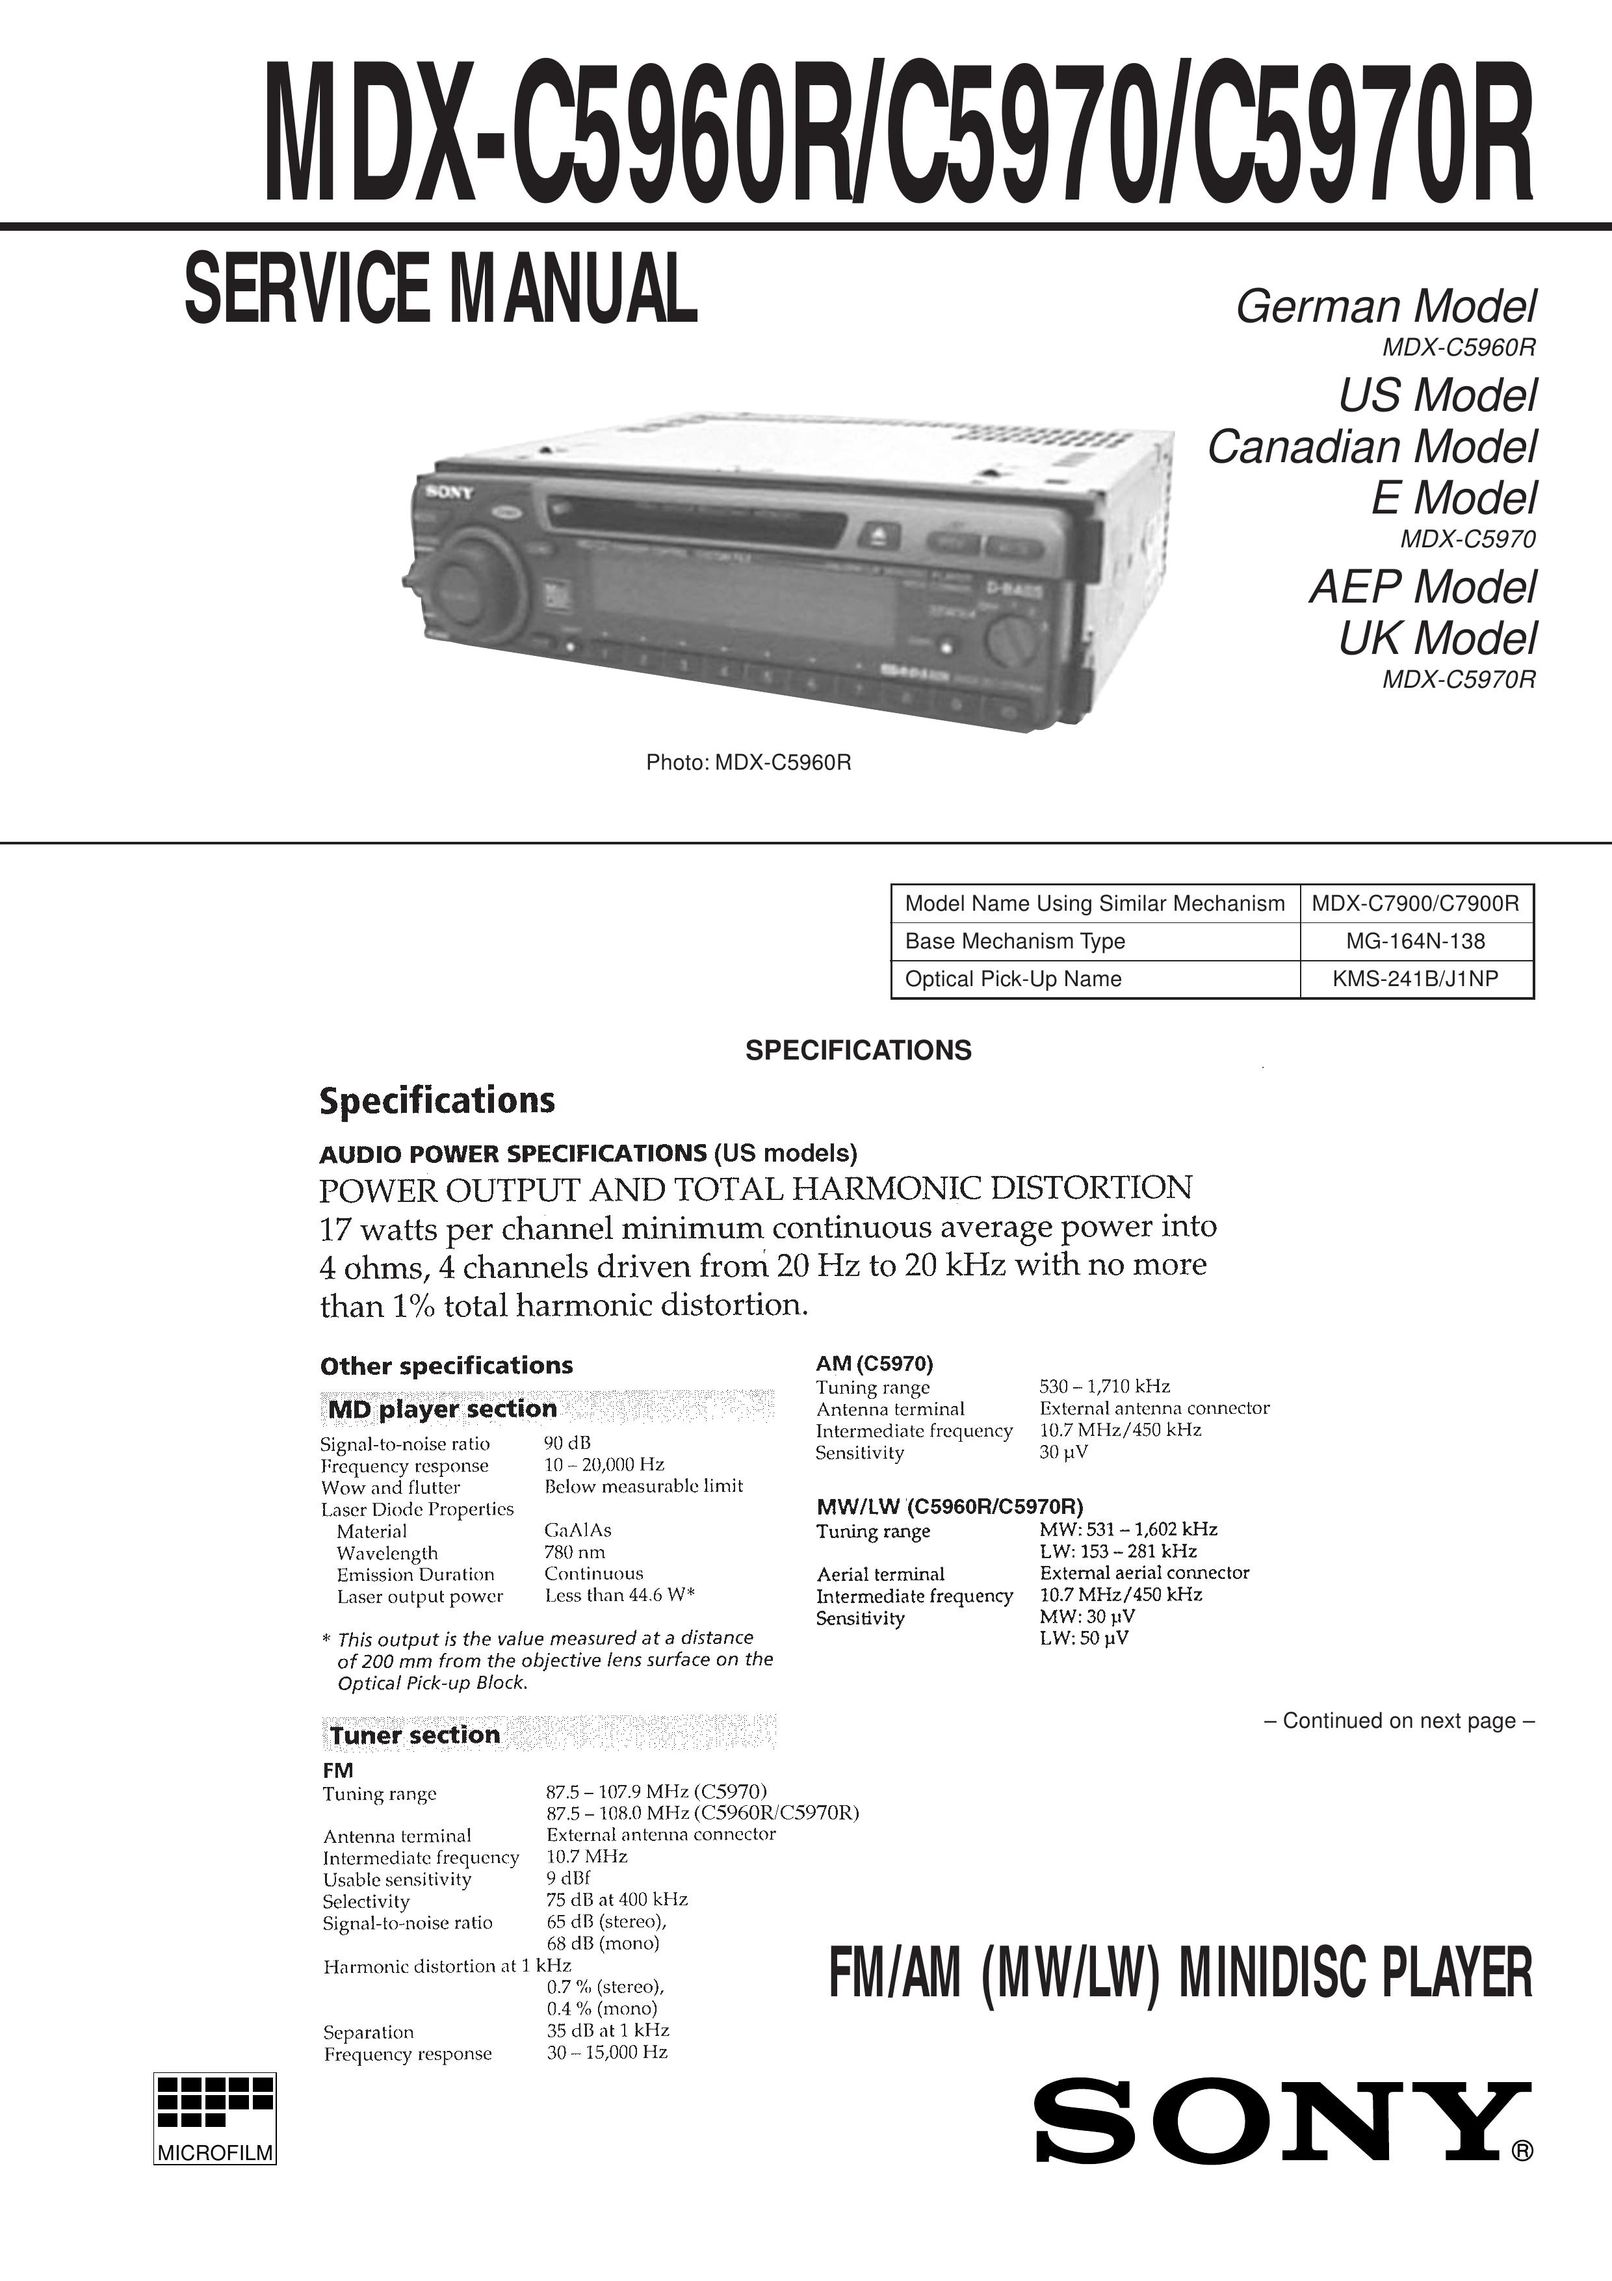 Sony MDX-C5970R MiniDisc Player User Manual